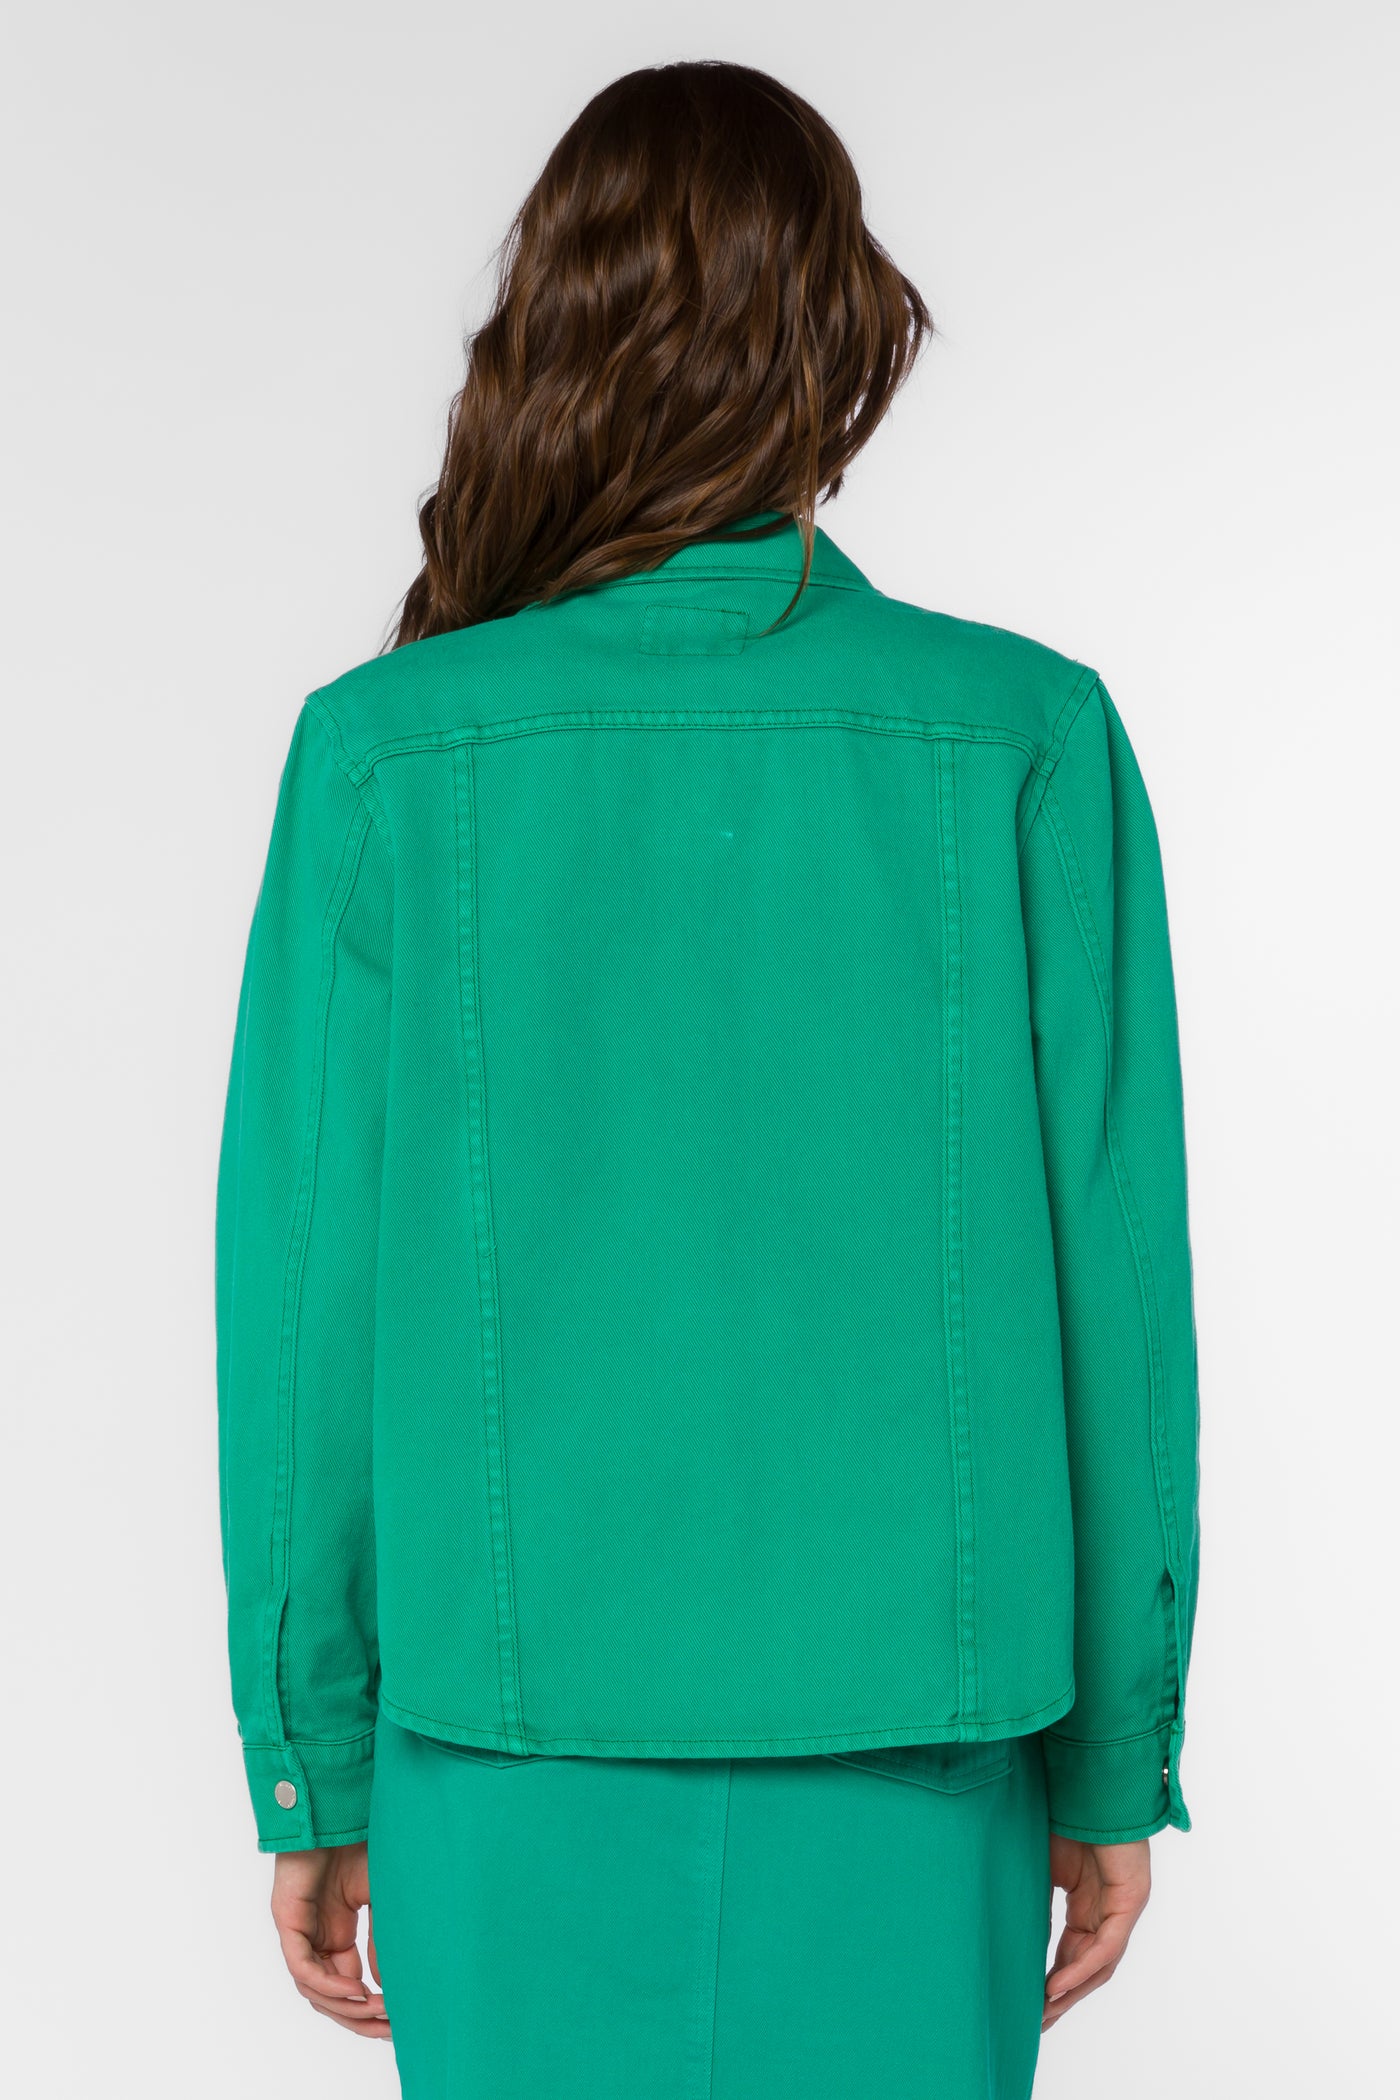 Jodie Bright Green Shacket - Jackets & Outerwear - Velvet Heart Clothing